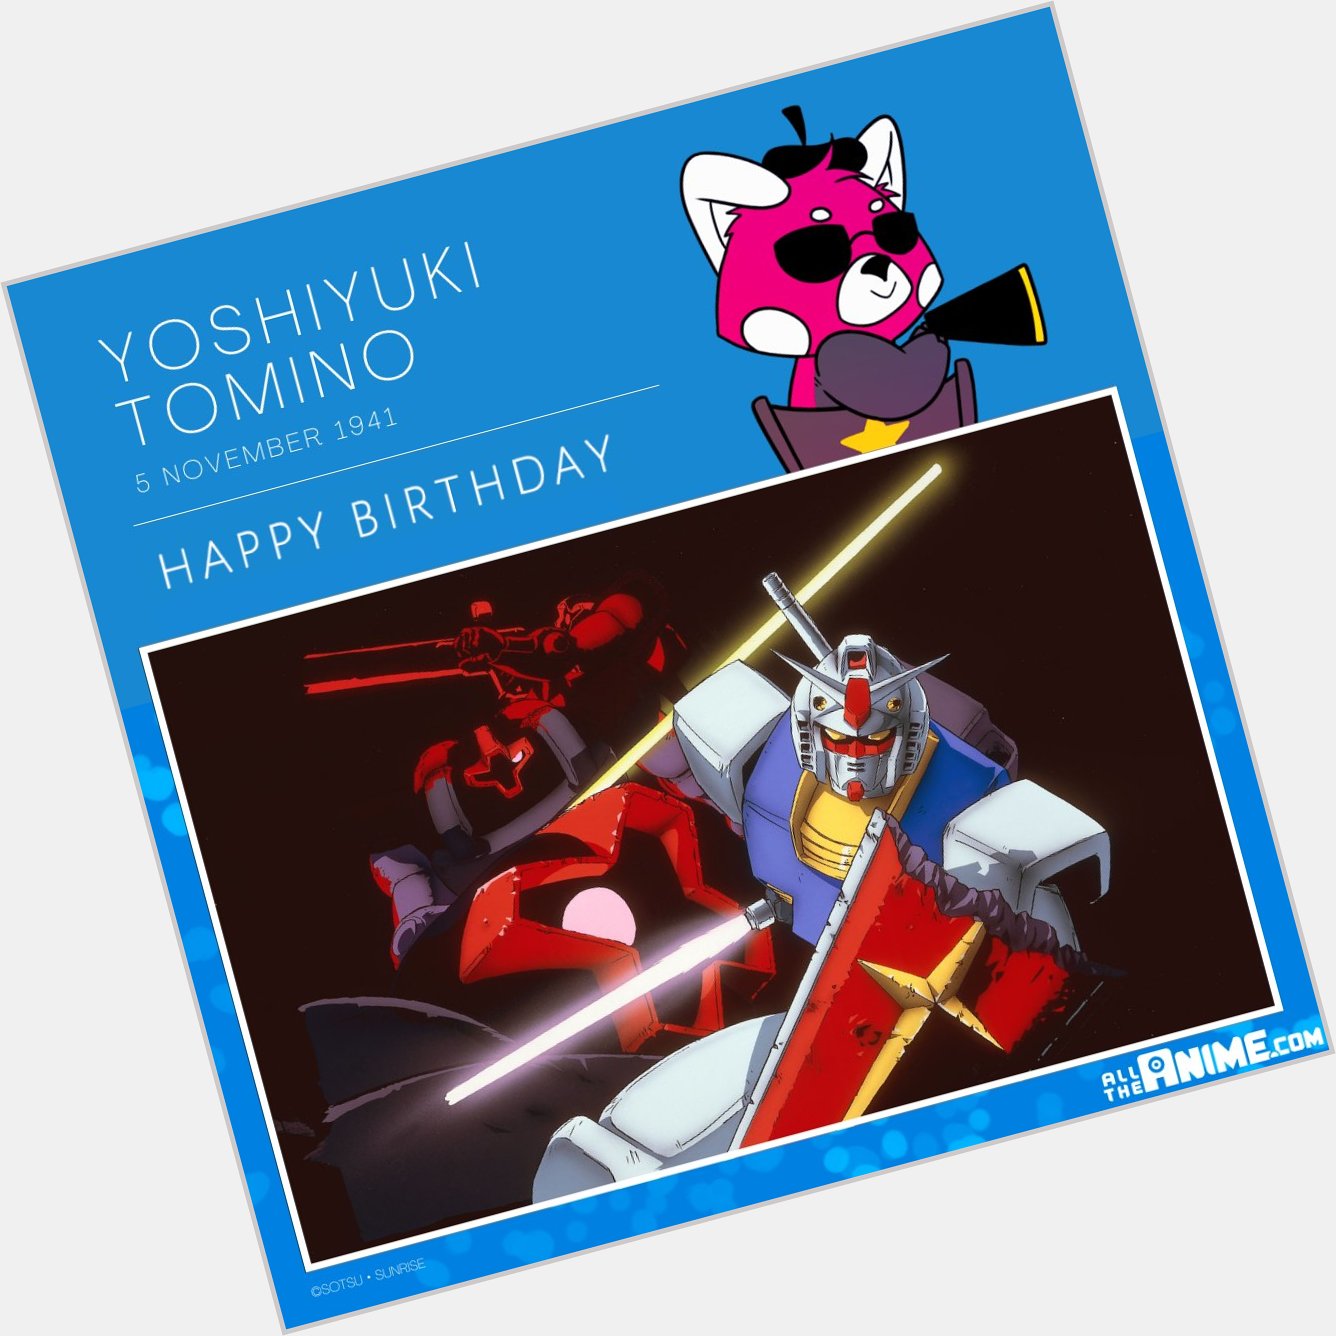 On this day in 1941, the creator of Mobile Suit Gundam Yoshiyuki Tomino was born Happy birthday Tomino-san! 